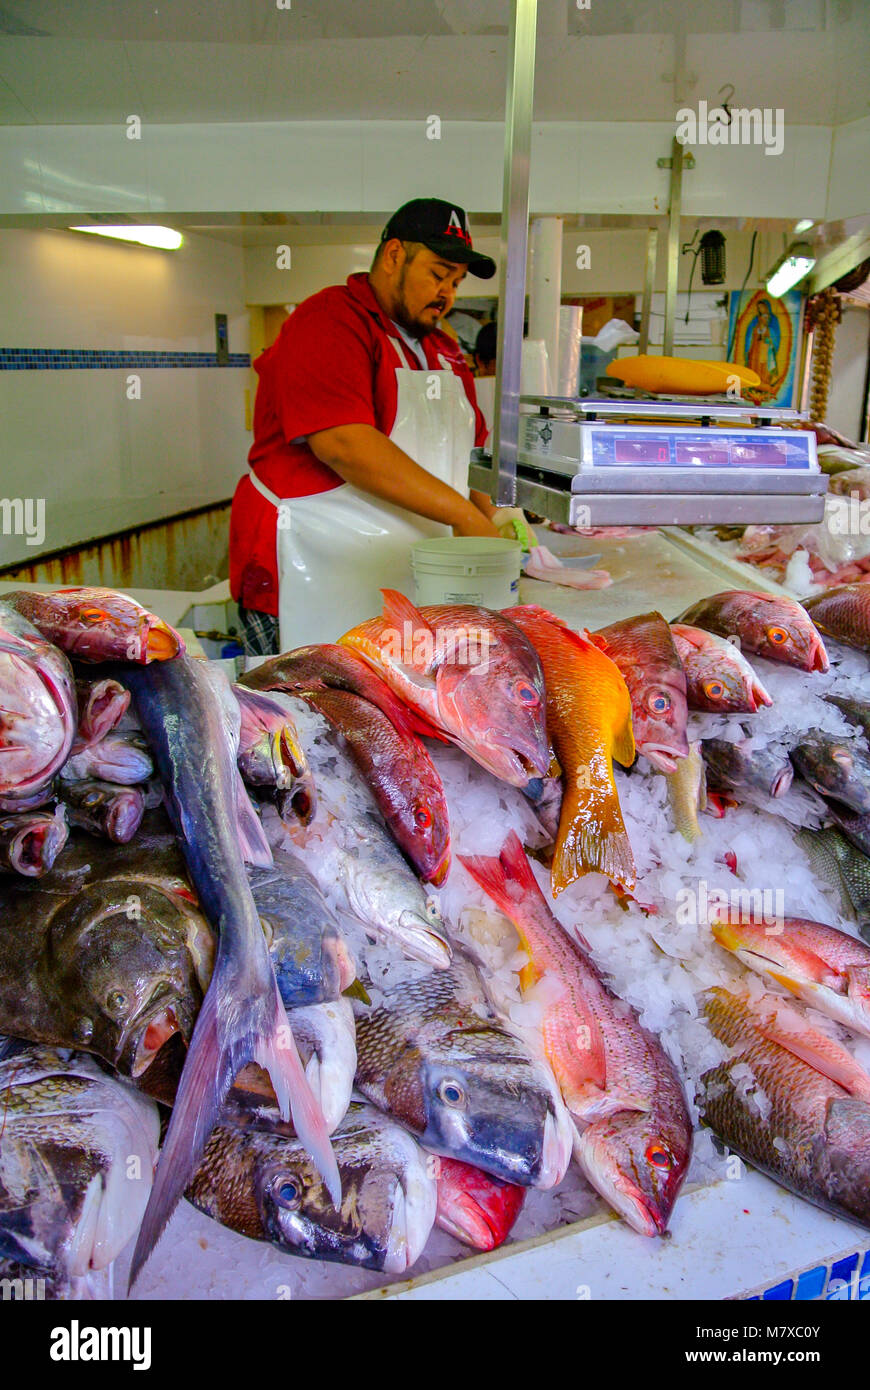 Puerto Vallarta, Jalisco, Mexico, A mexican man preparing fish at fishmonger. Editorial only. Stock Photo